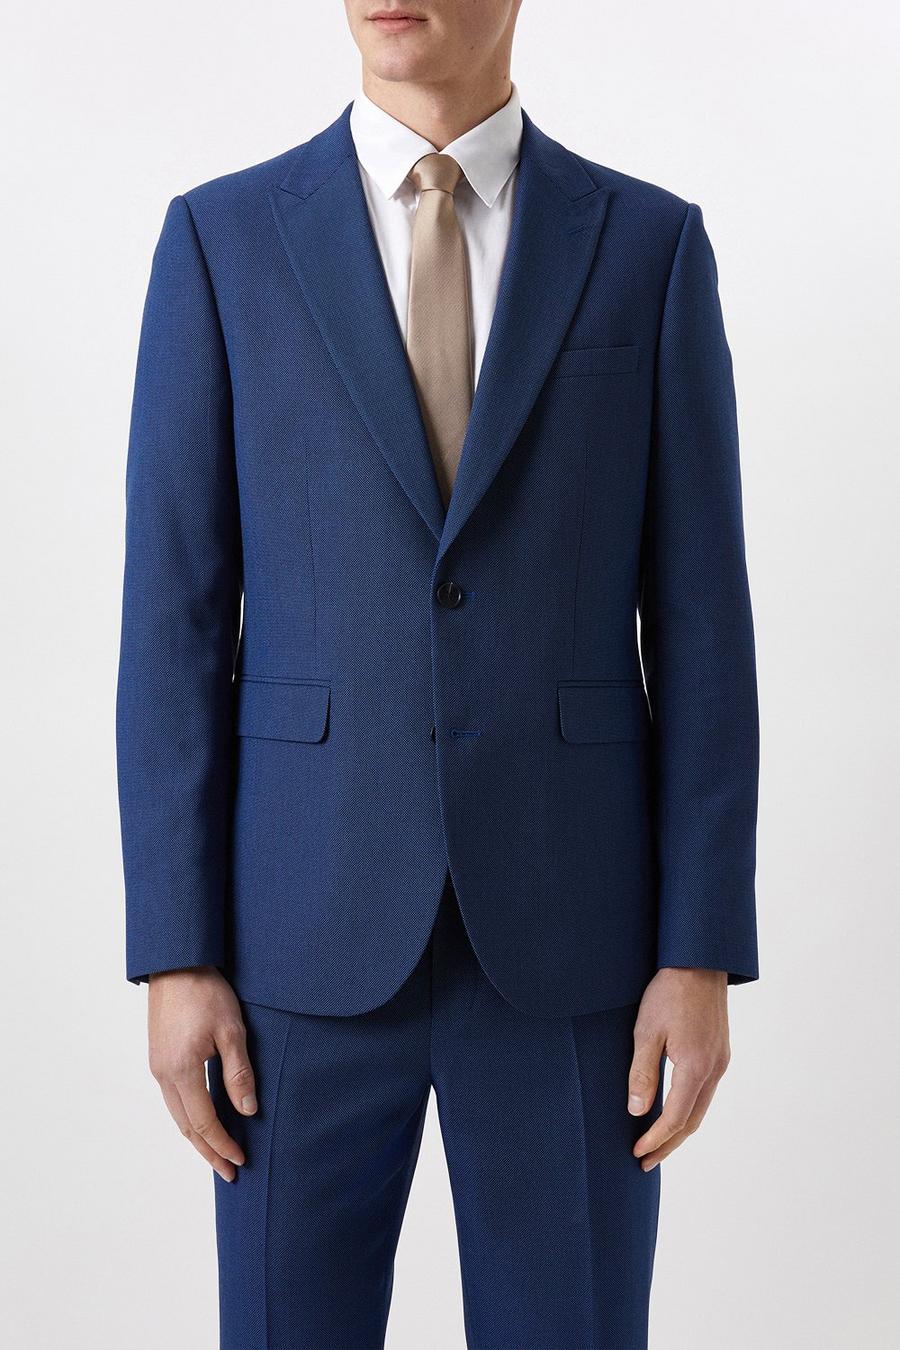 Plus And Tall Slim Fit Blue Birdseye Three-Piece Suit